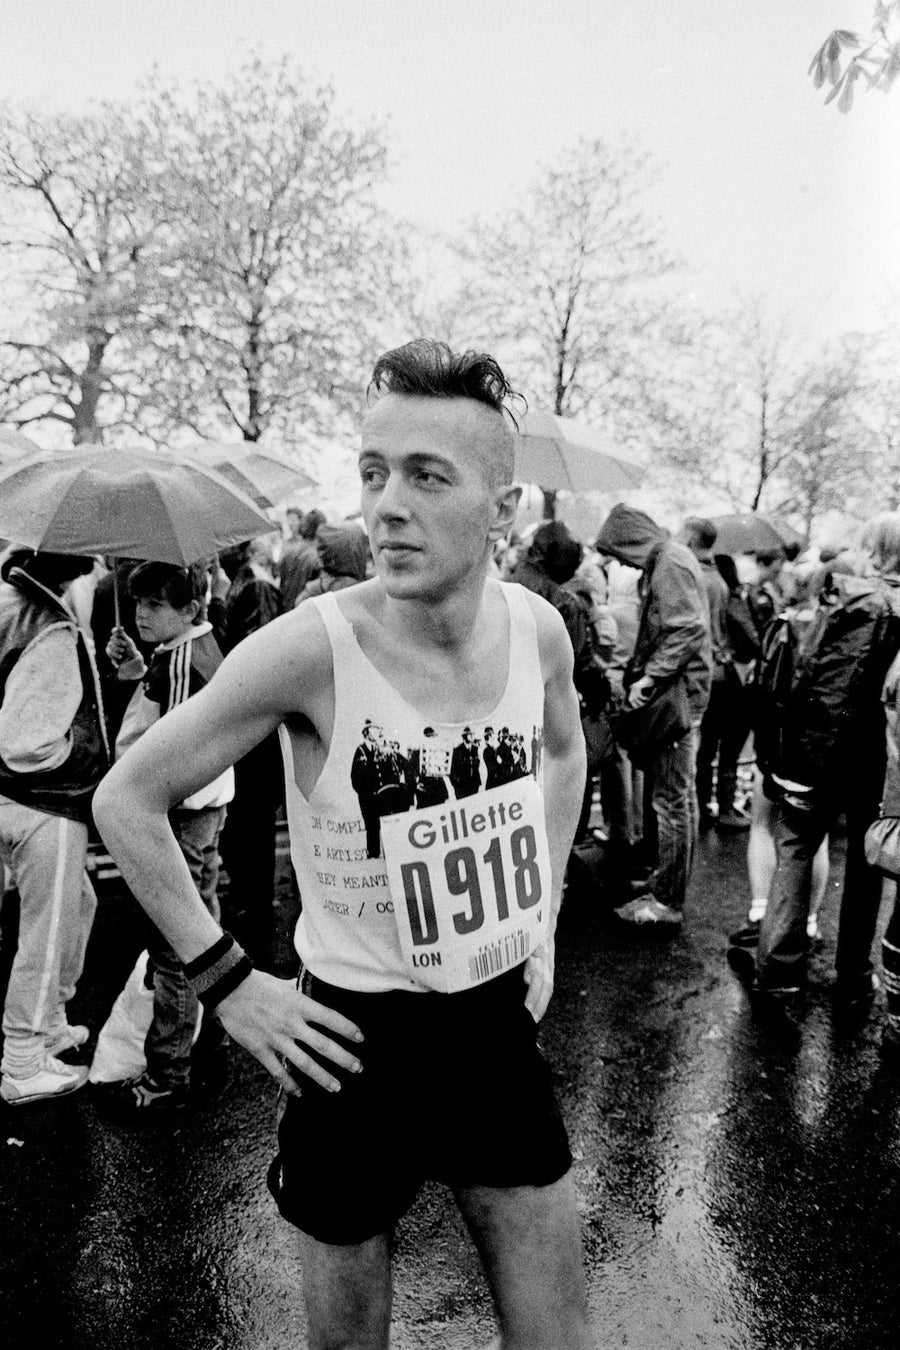 Steve Rapport "Joe Strummer: London Marathon #11" (1983)